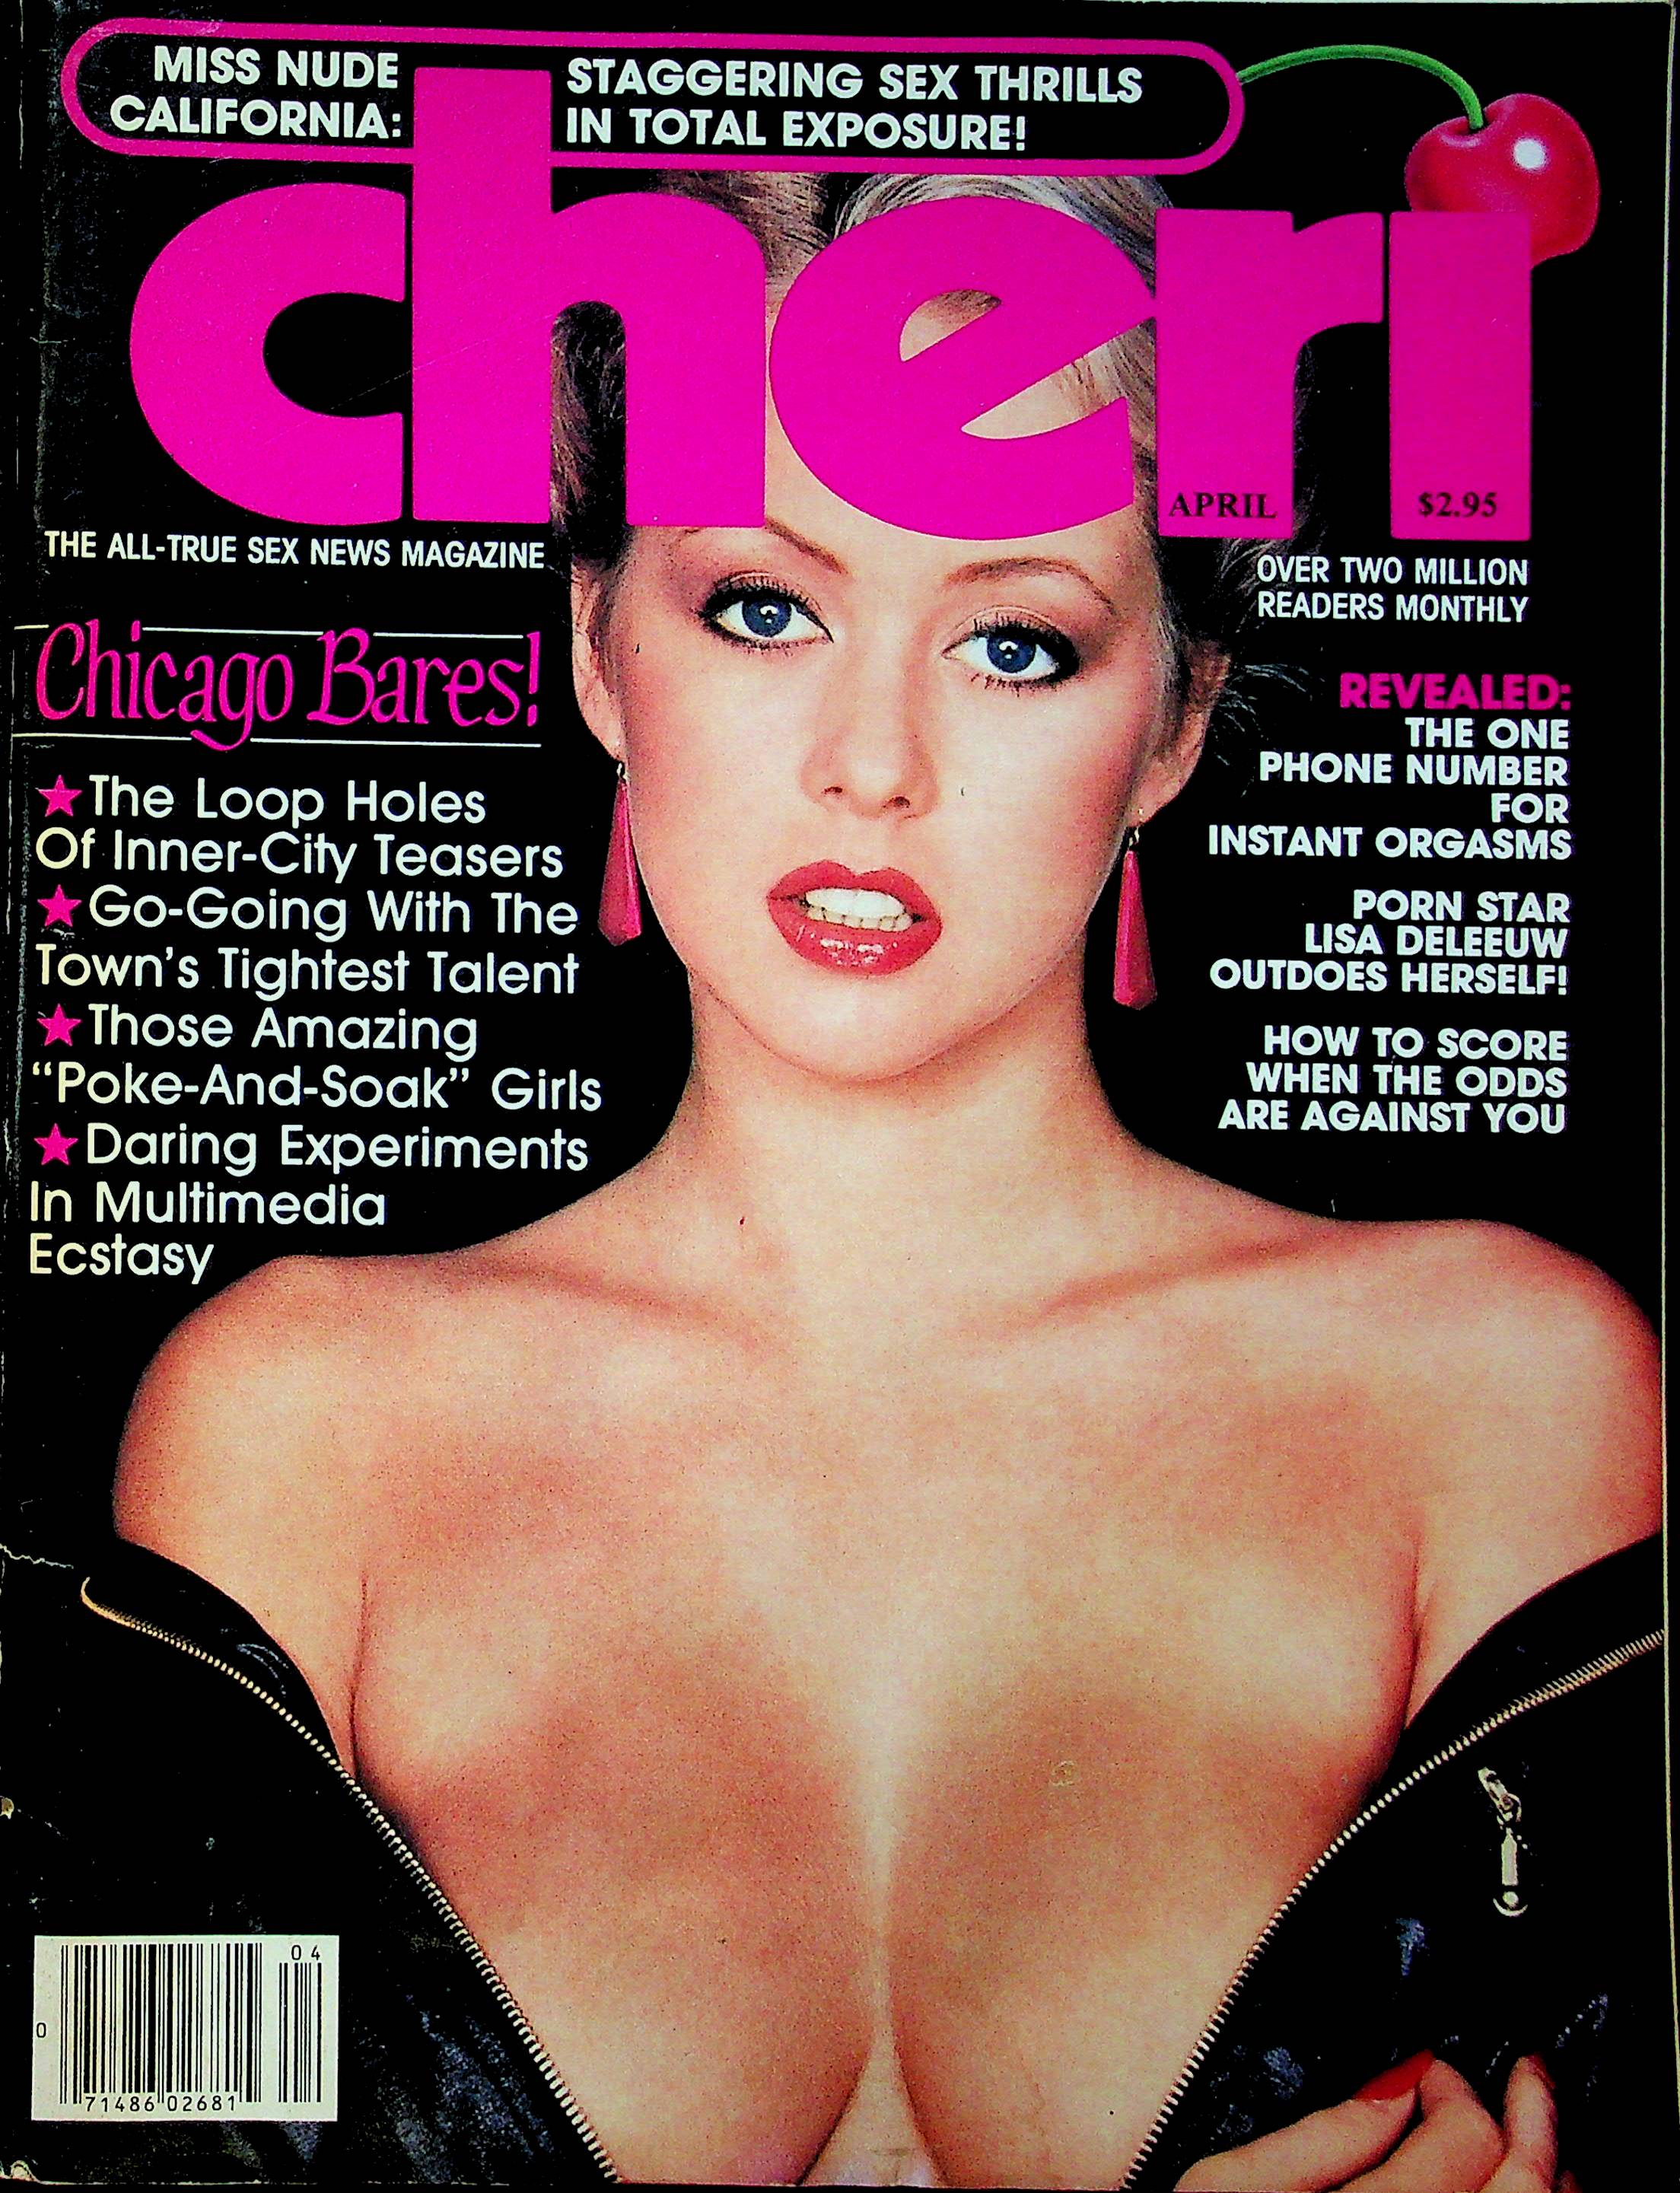 Cheri Magazine Lisa Deleeuw & Chicago Bares & Miss Nude California Apr â€“  Mr-Magazine